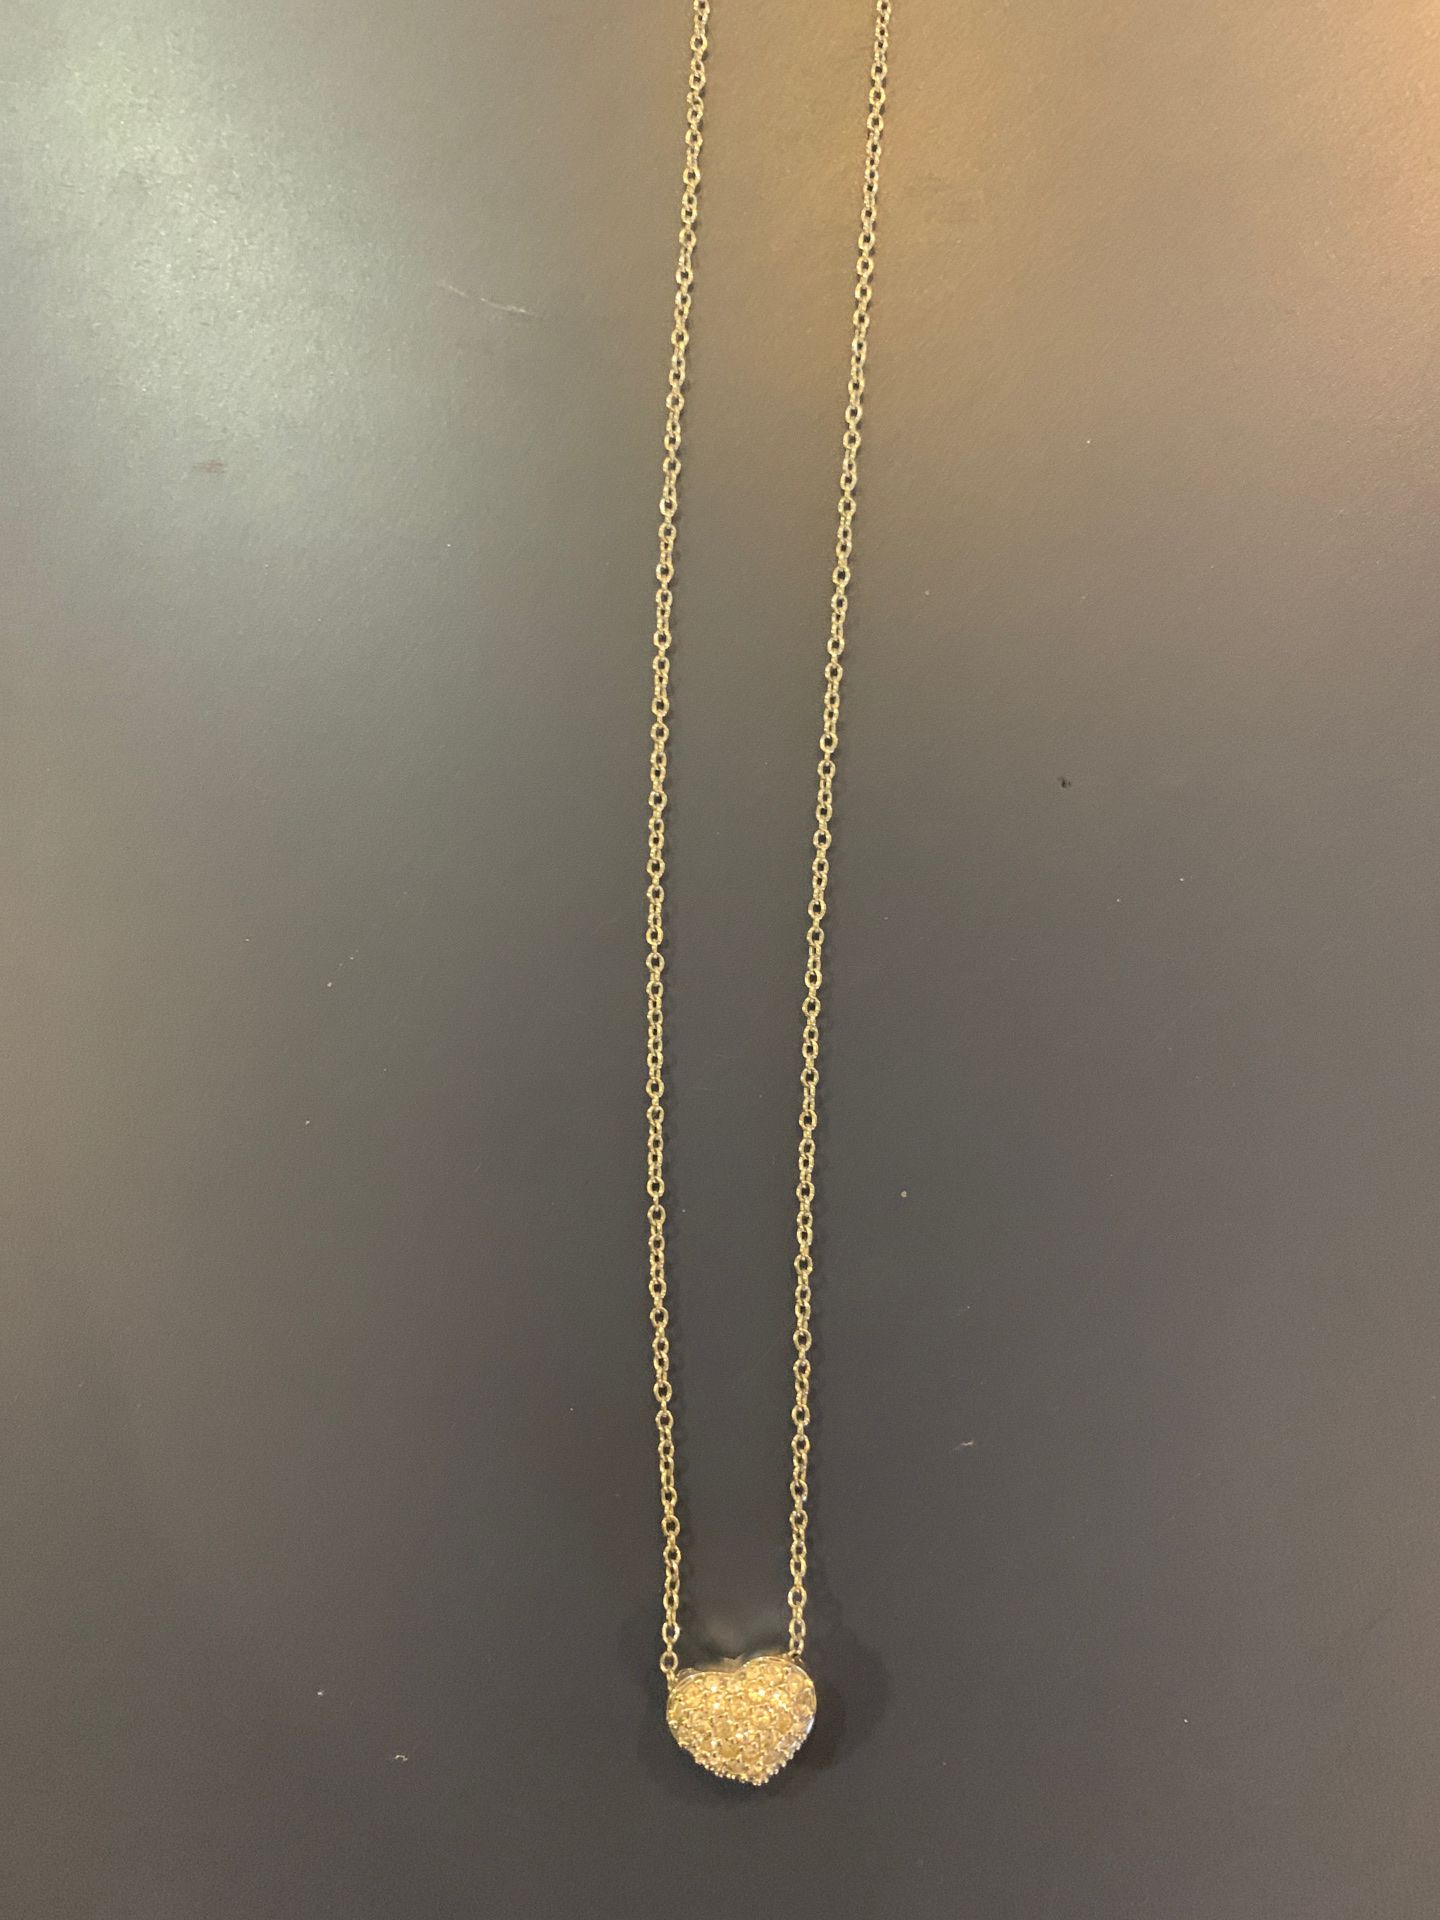 Swarovski necklace, heart